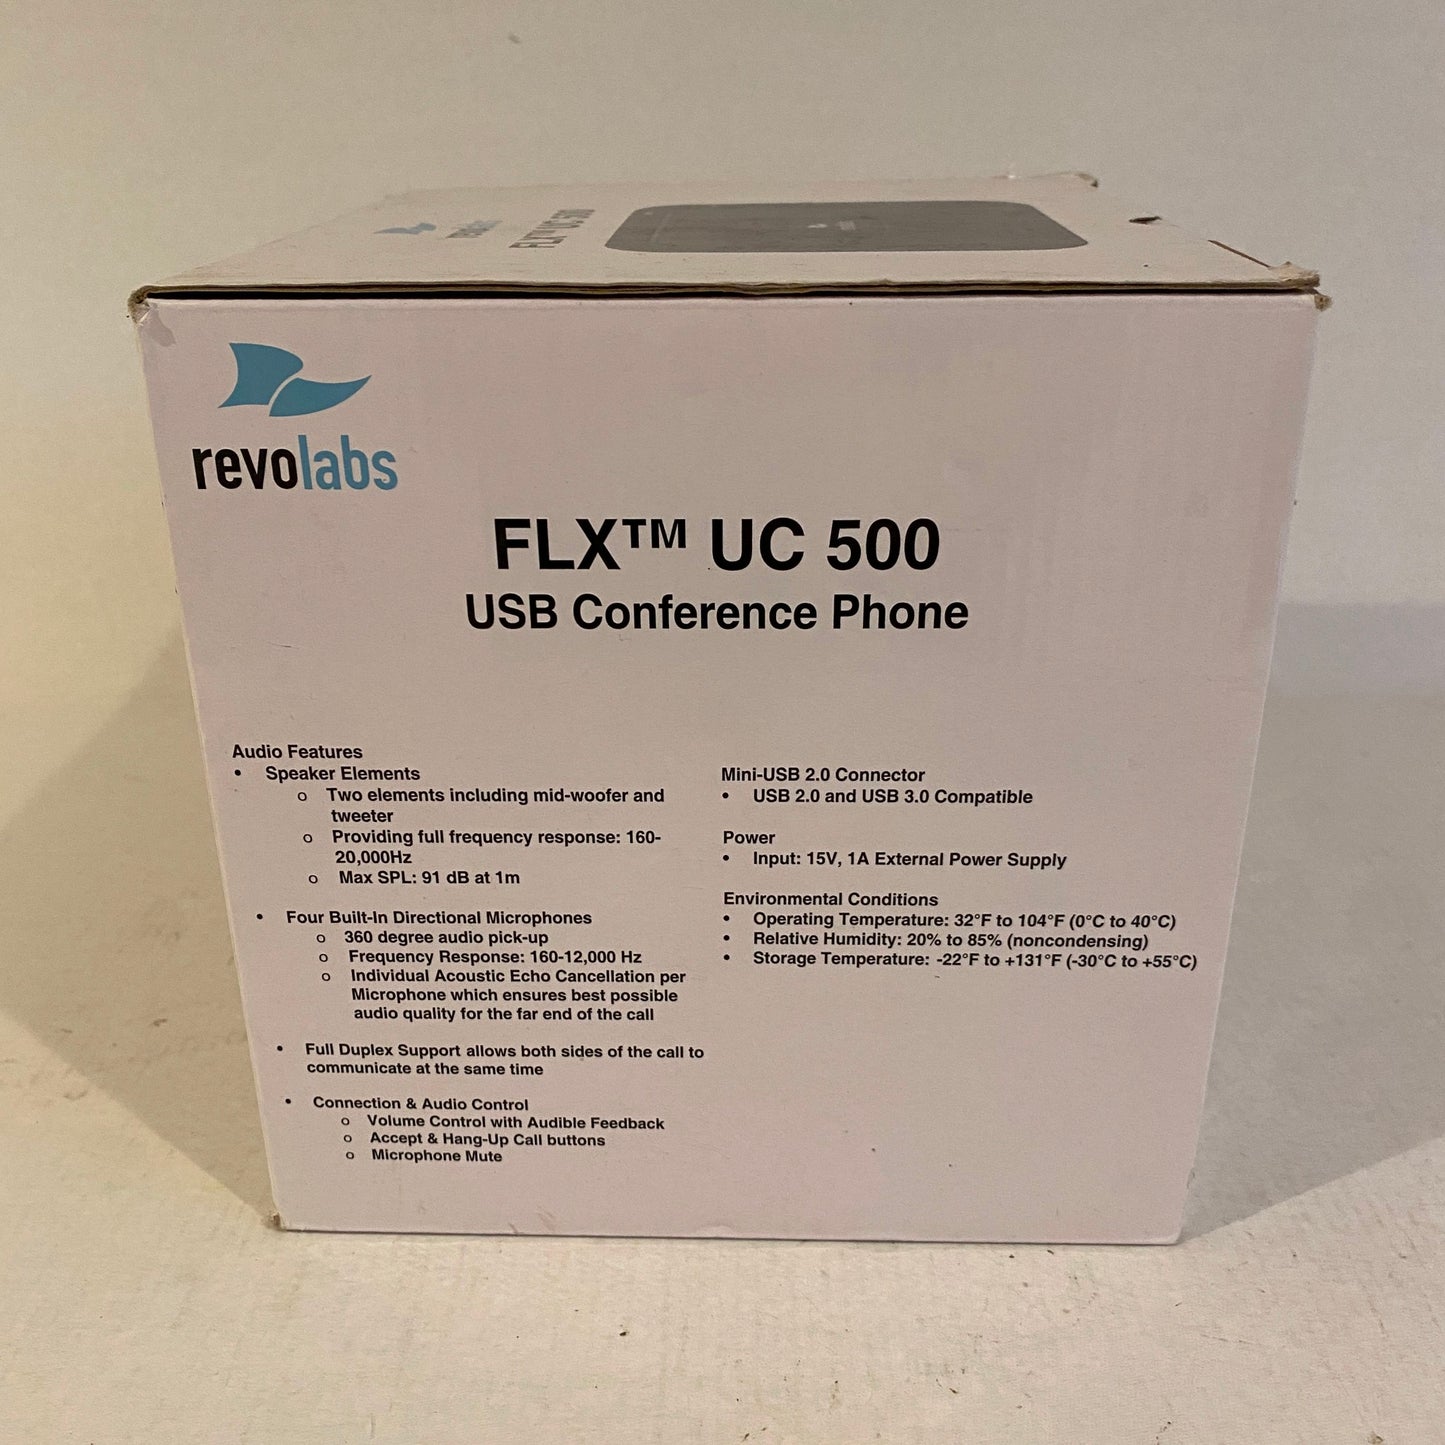 Revolabs USB Conference Speakerphone - FLX UC 500